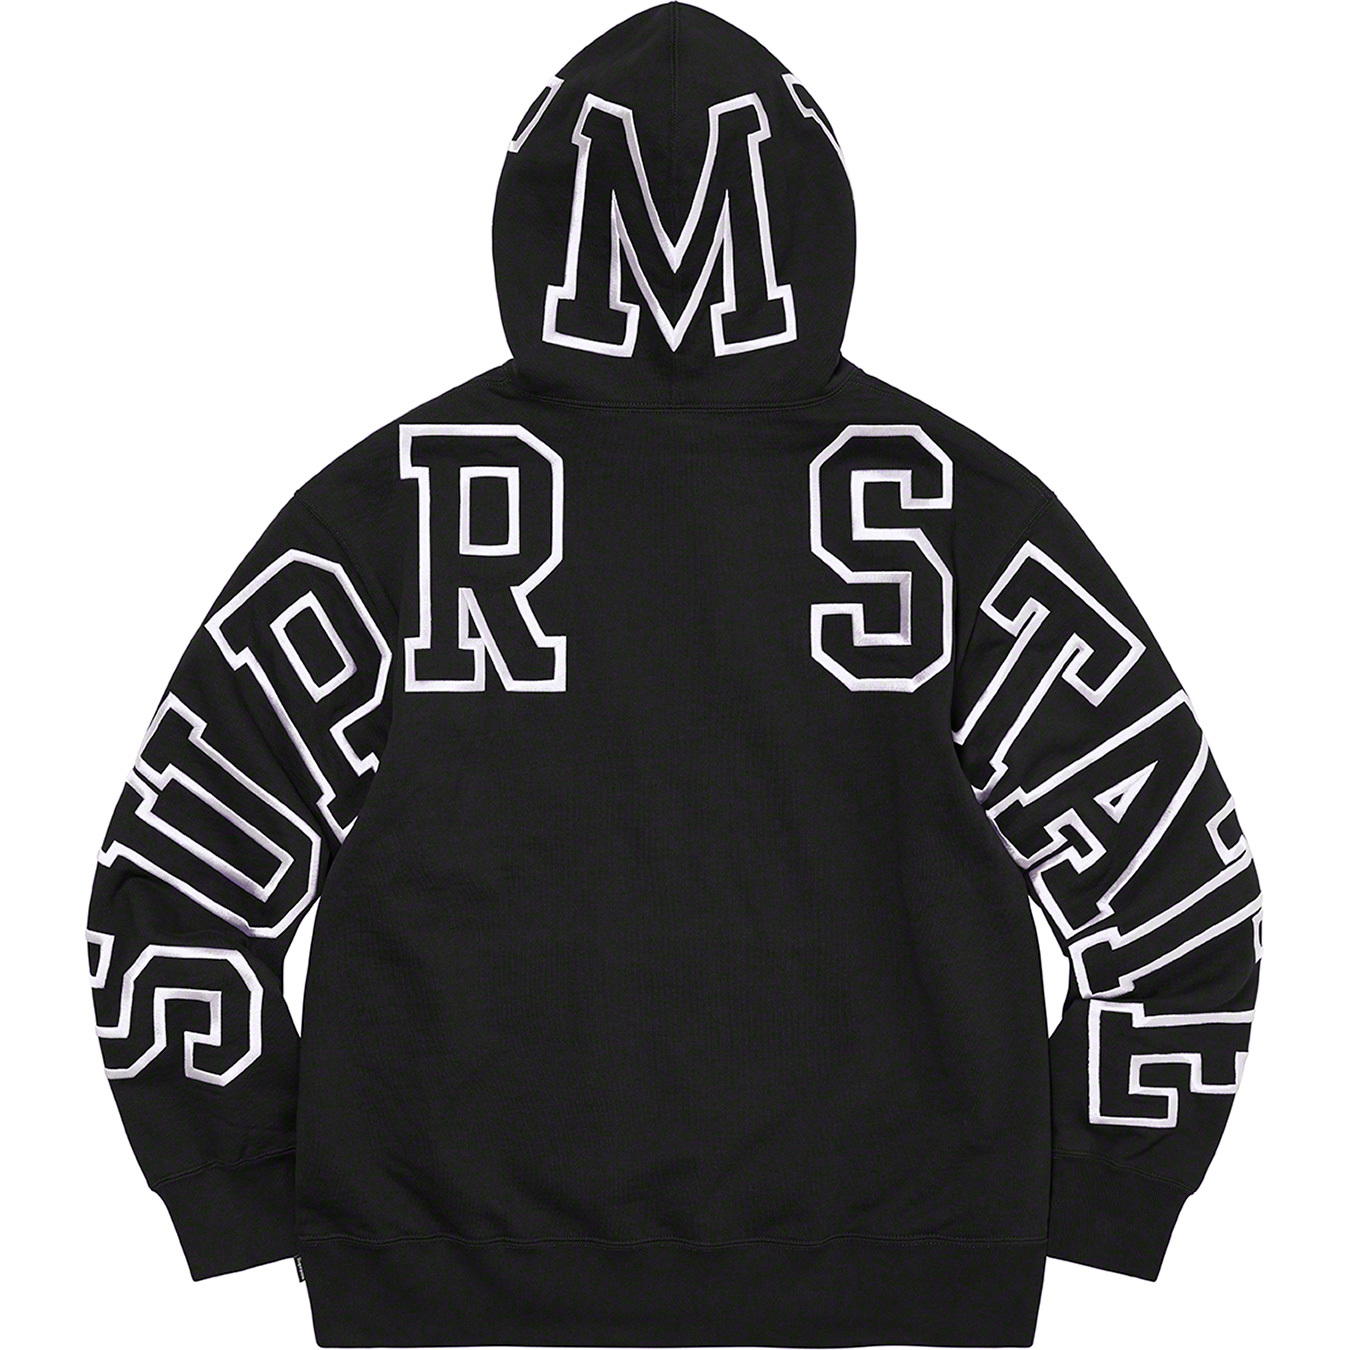 Supreme US-NY Hooded Sweatshirt Black